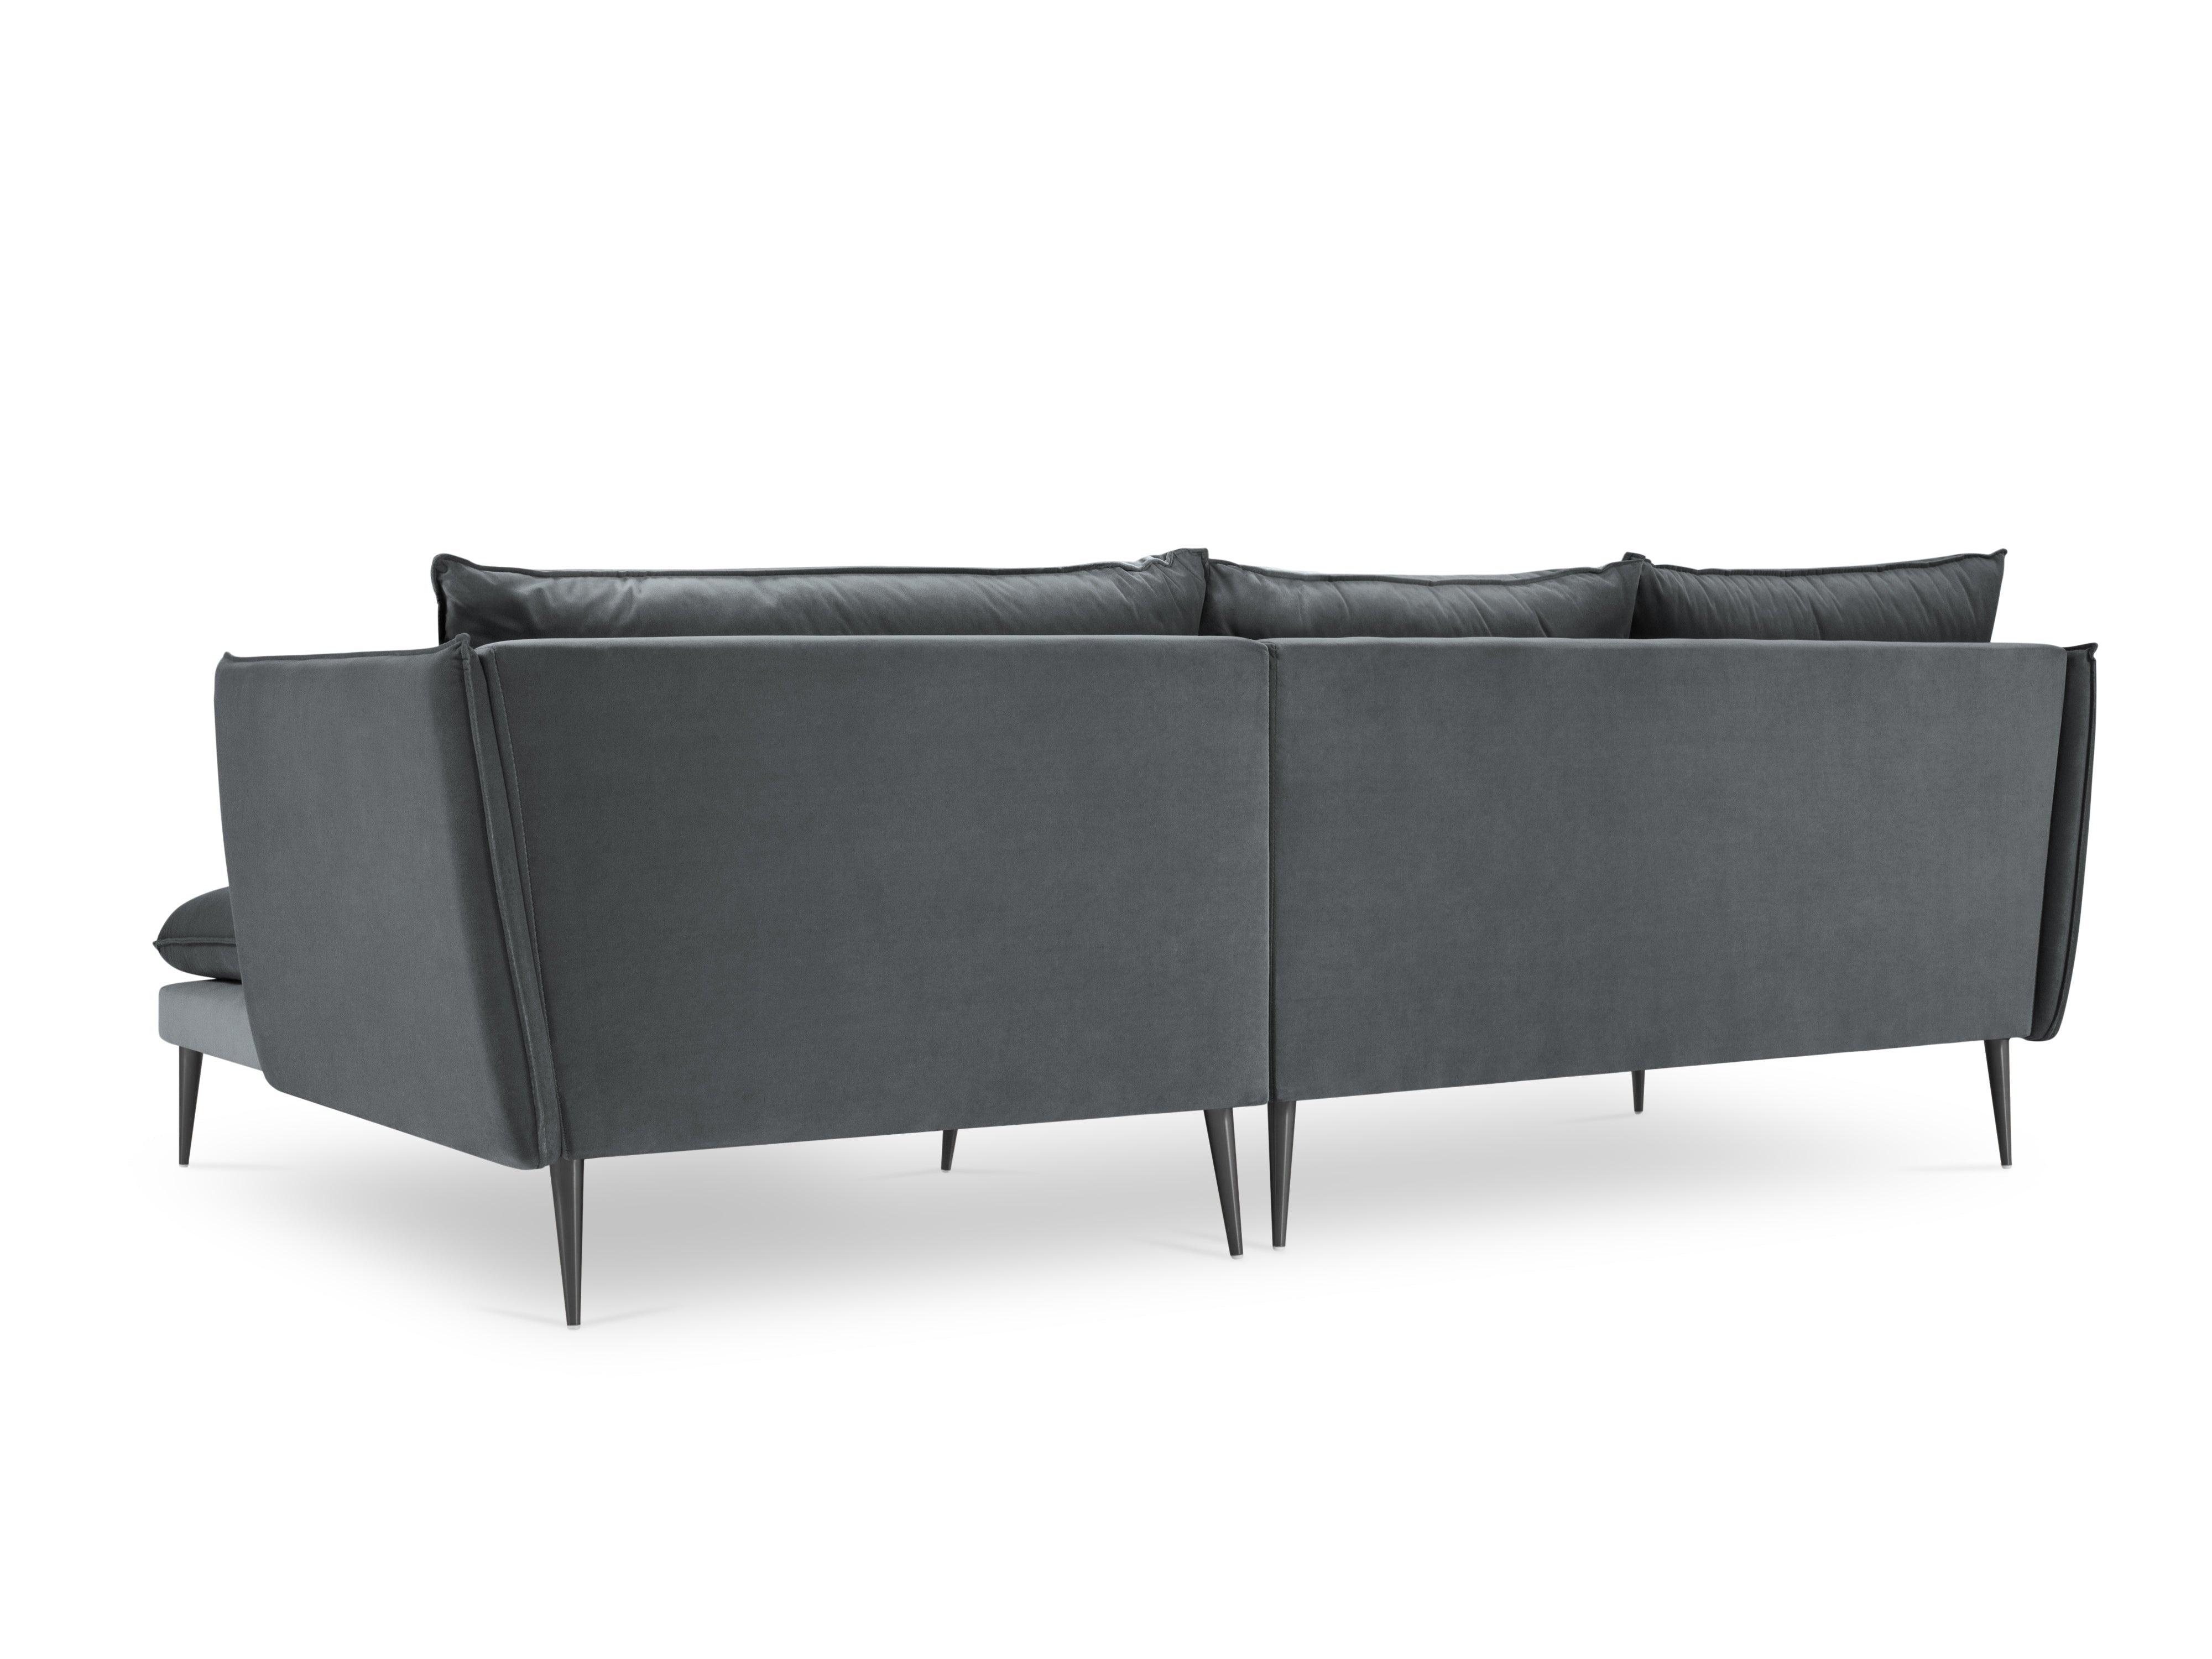 dark gray sofa with a black base